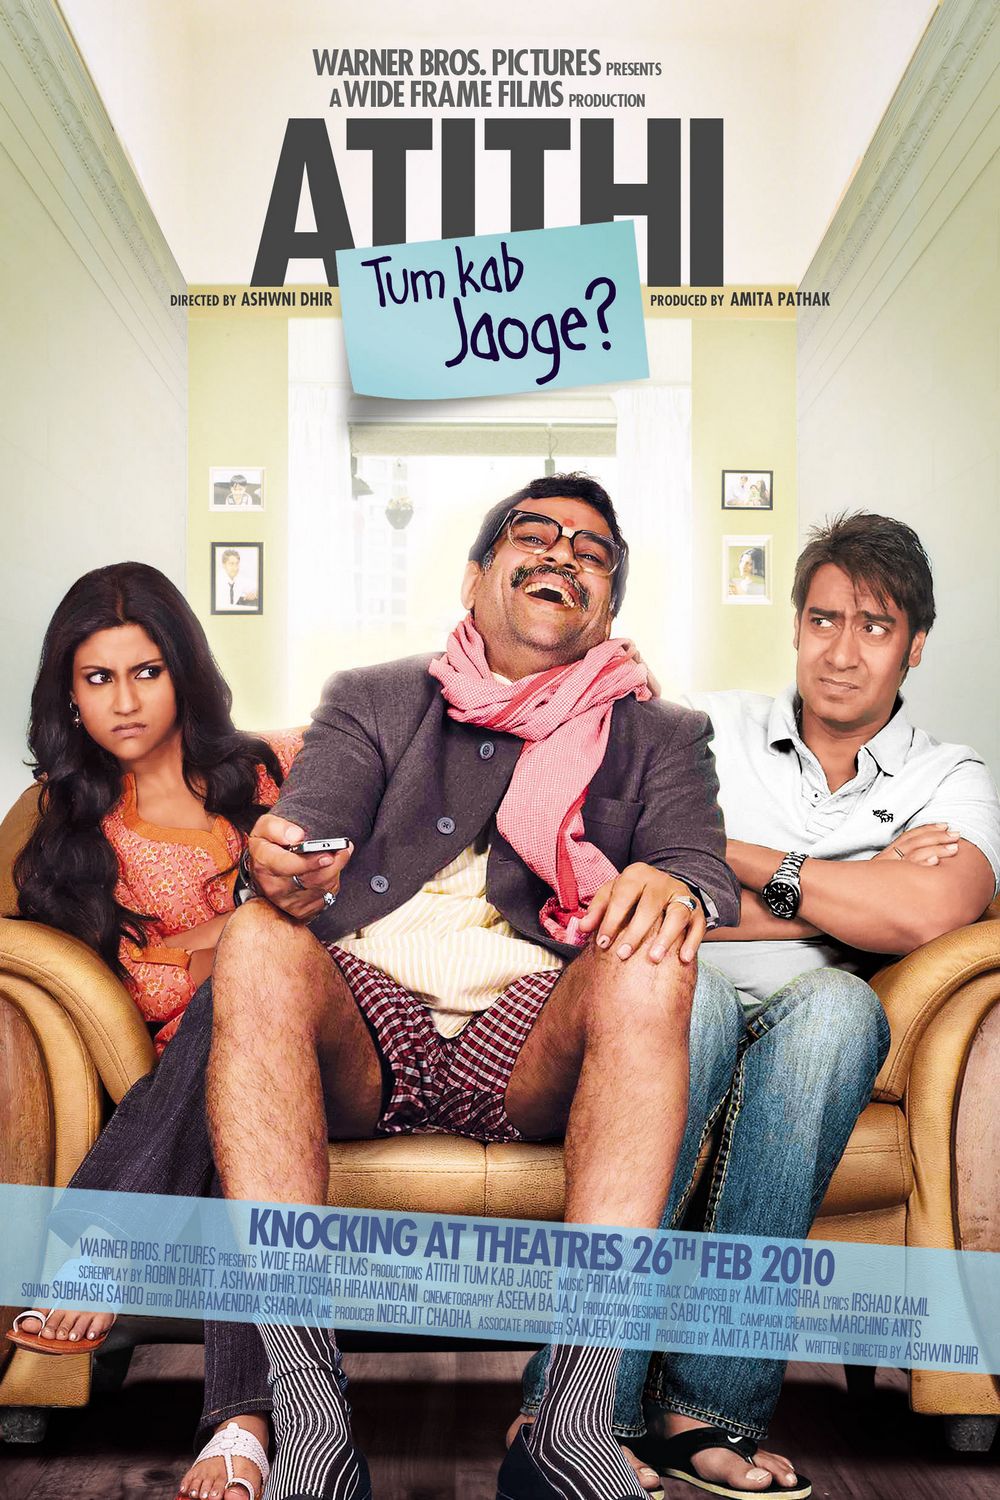 Extra Large Movie Poster Image for Atithi Tum Kab Jaoge (#5 of 5)